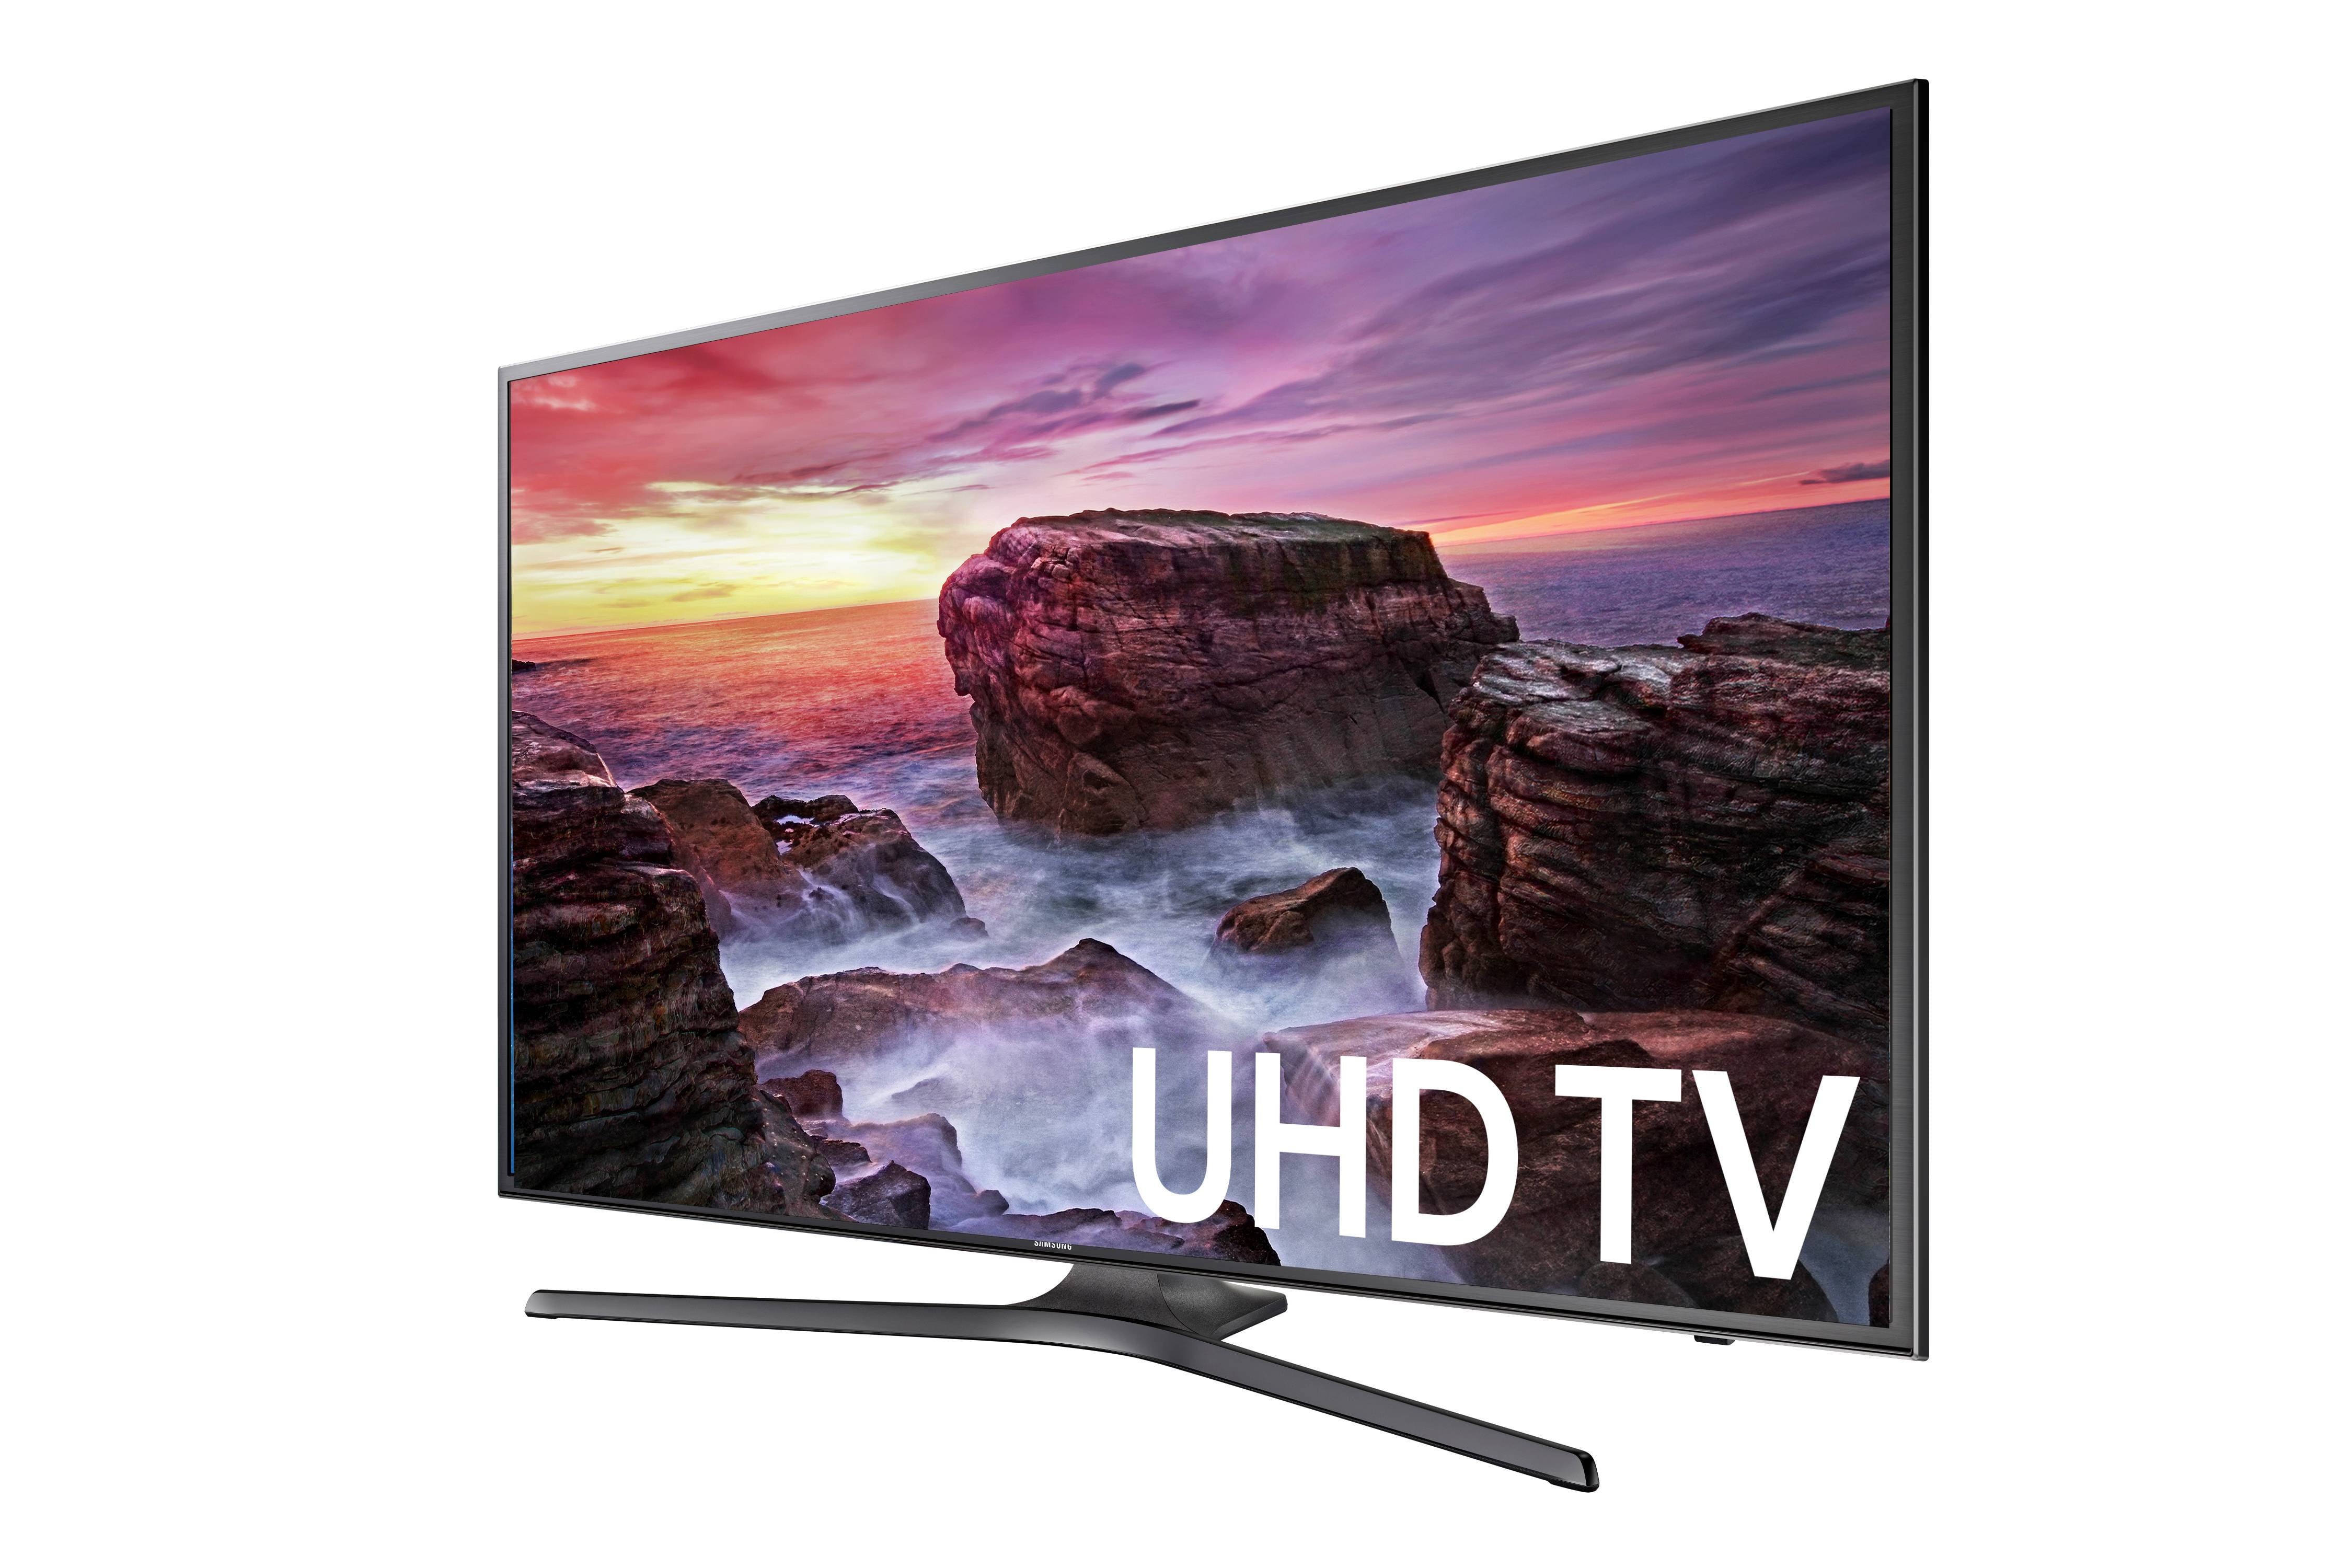 Название телевизора самсунг. Samsung 6 Series 50 Smart TV. Телевизор самсунг 58 дюймов. Samsung Smart TV 55.